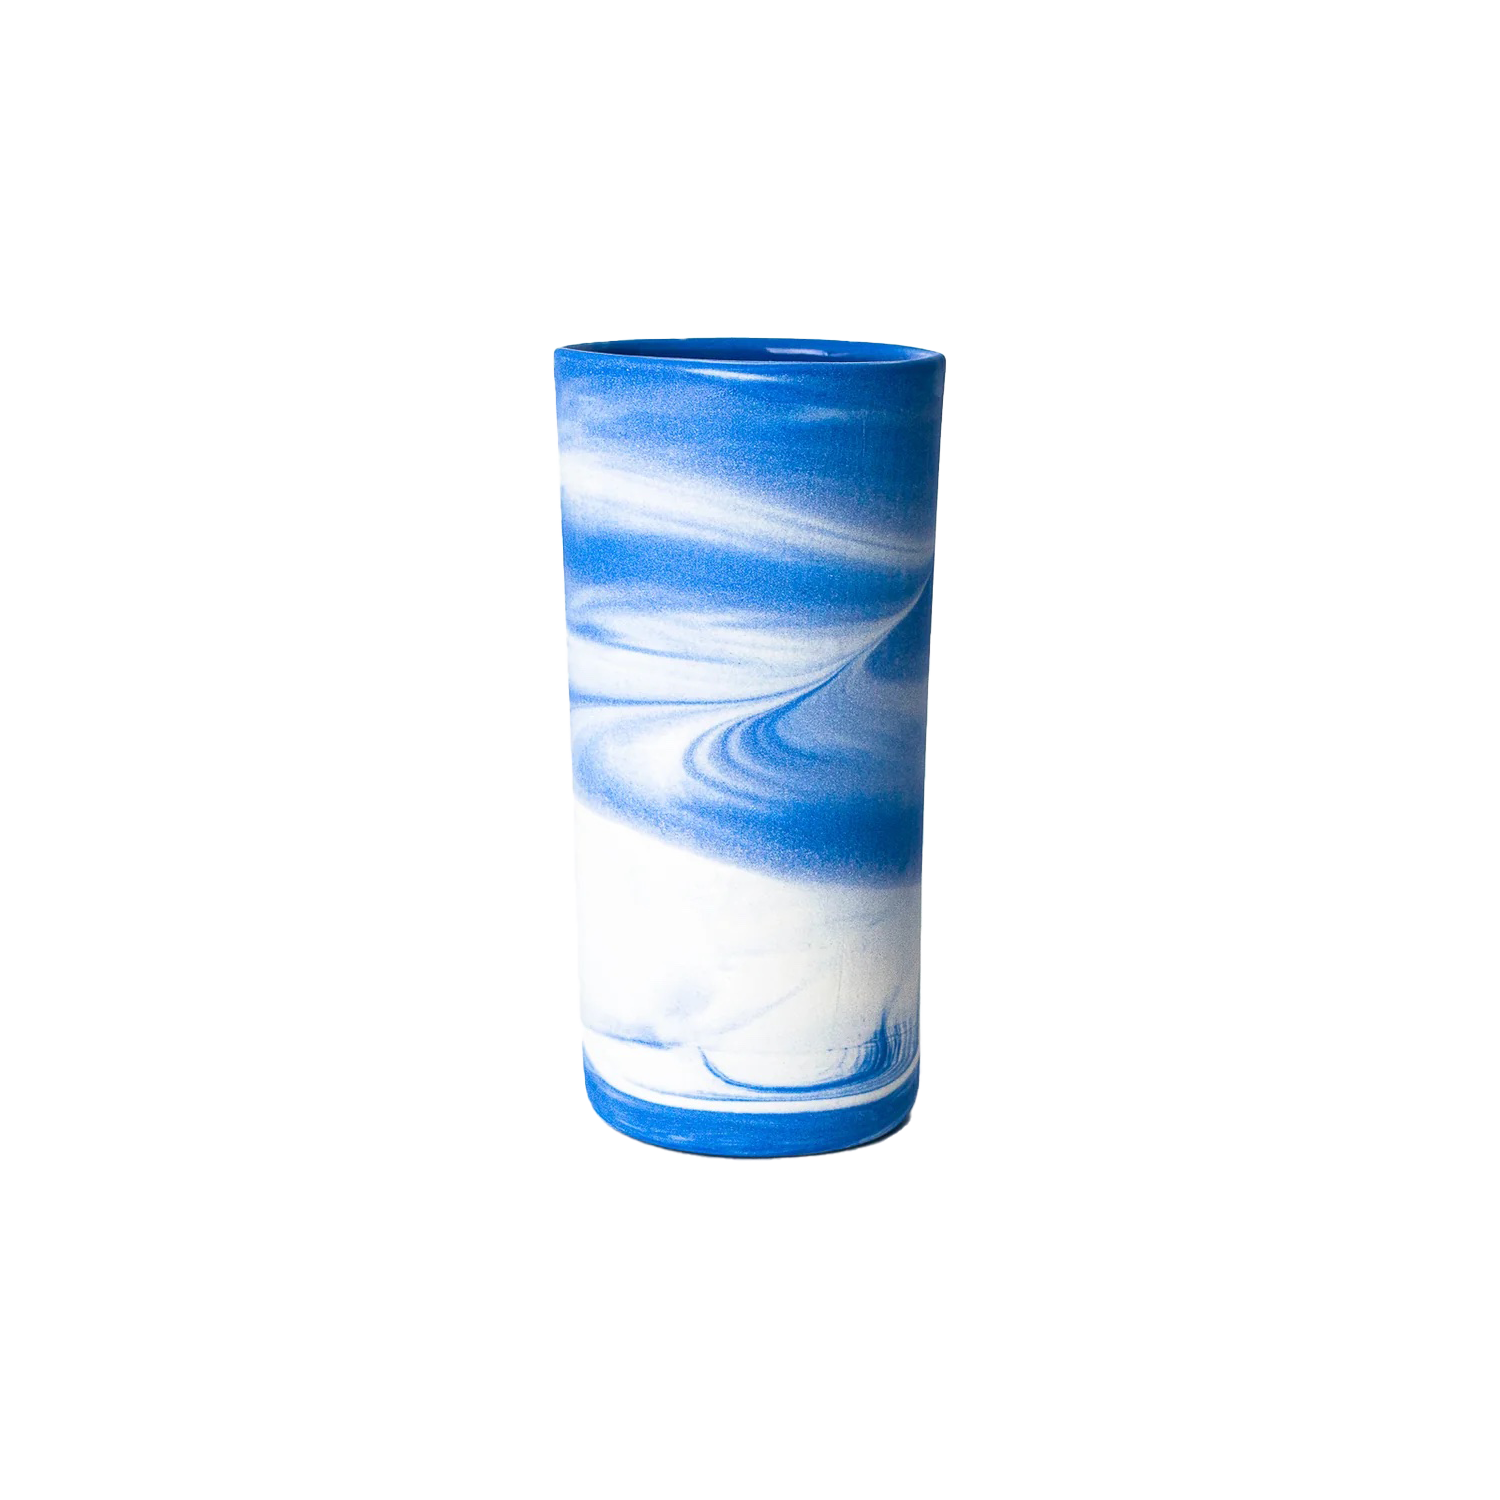 Haand Cloudware Skinny Vase